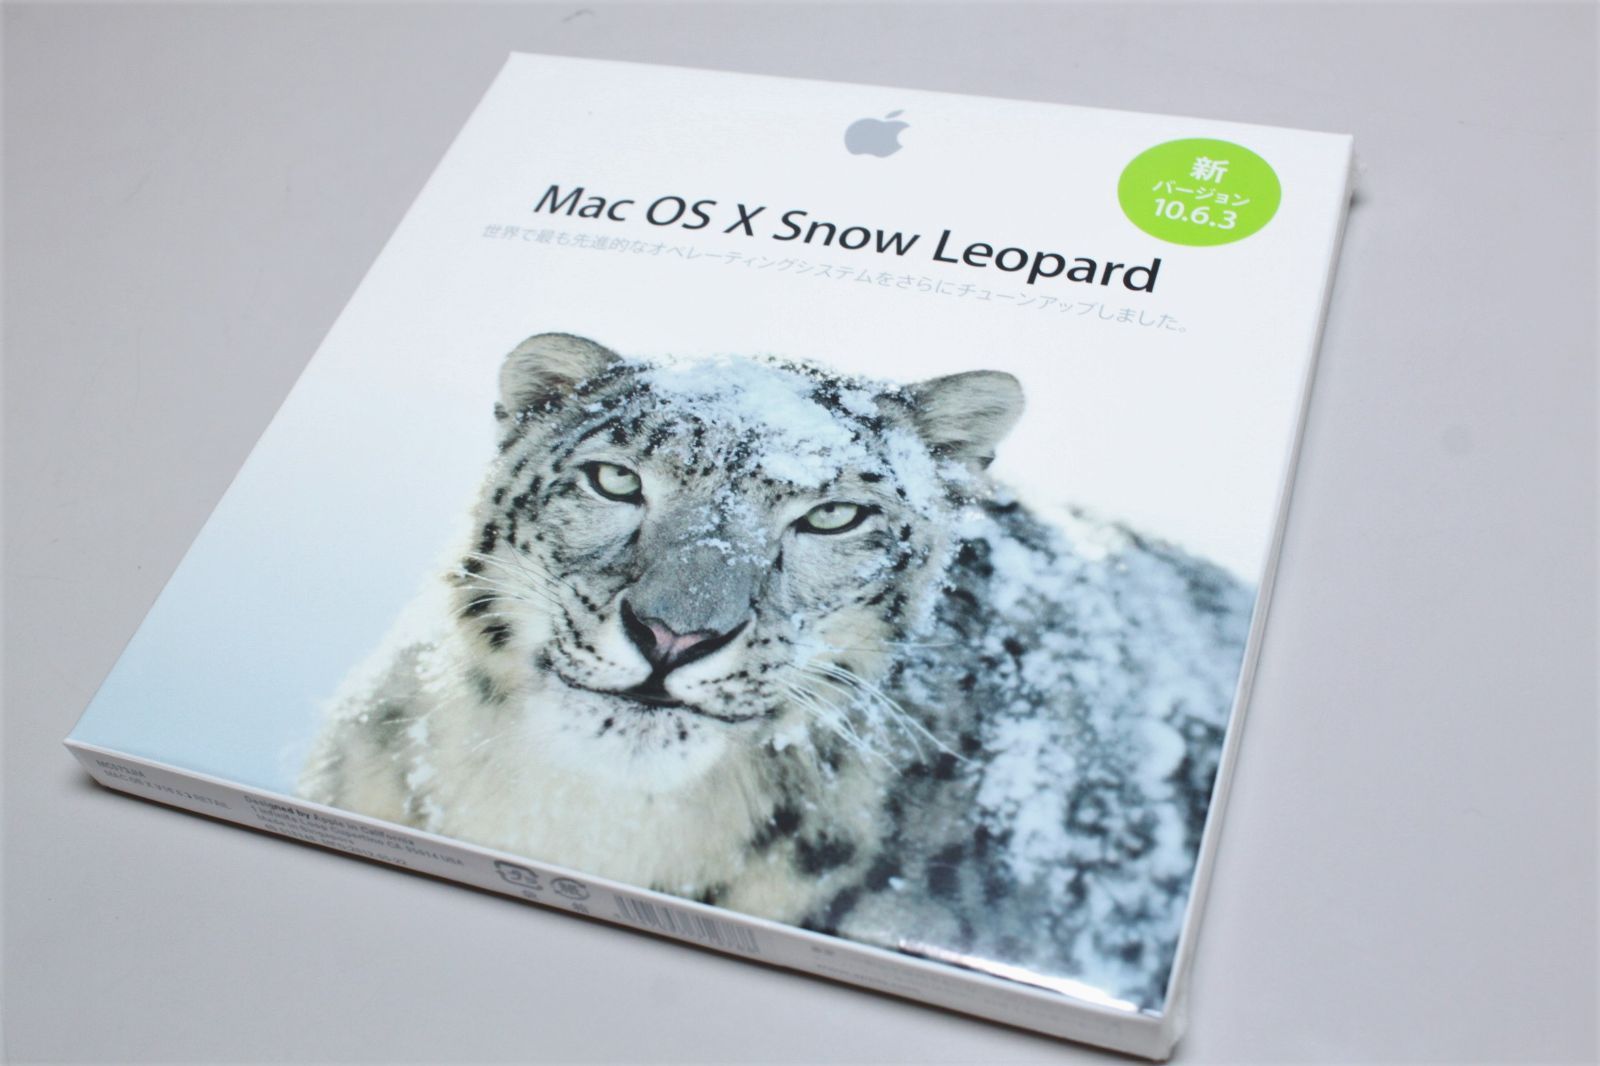 未開封】Apple/Mac OS X 10.6.3 Snow Leopard〈MC573J/A〉パッケージ版 